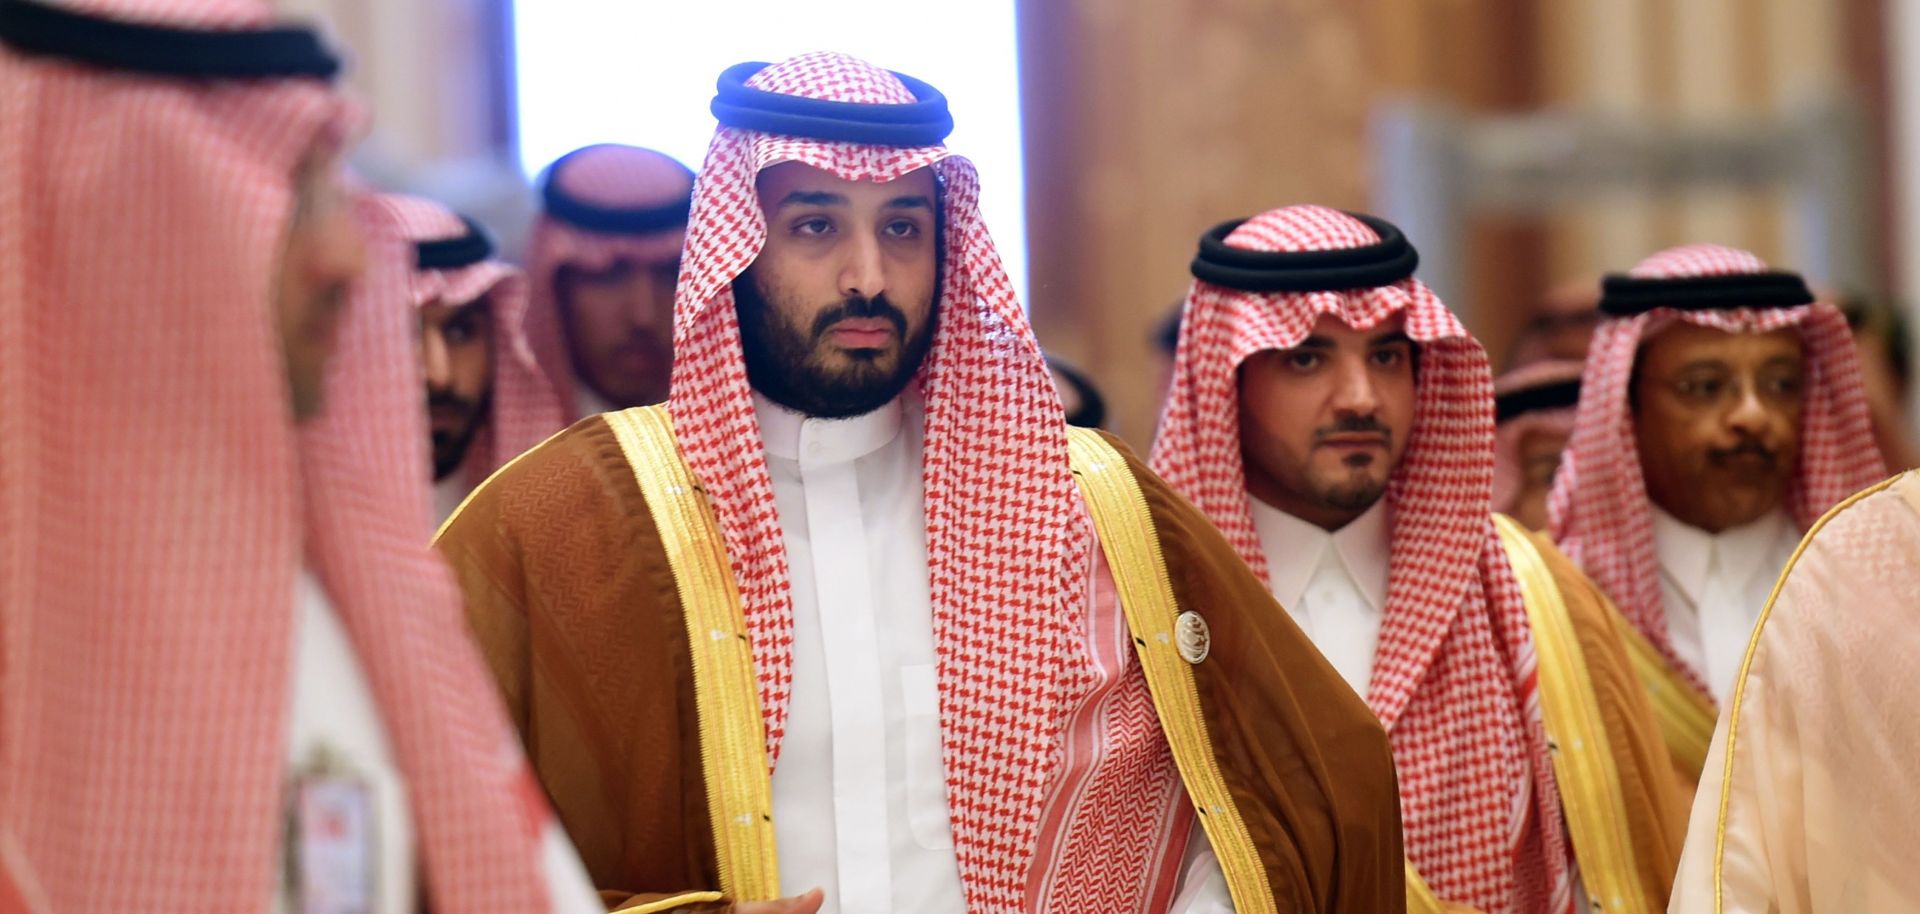 Saudi Defense Minister Mohammed bin Salman (C) attends a summit in Riyadh in 2015.